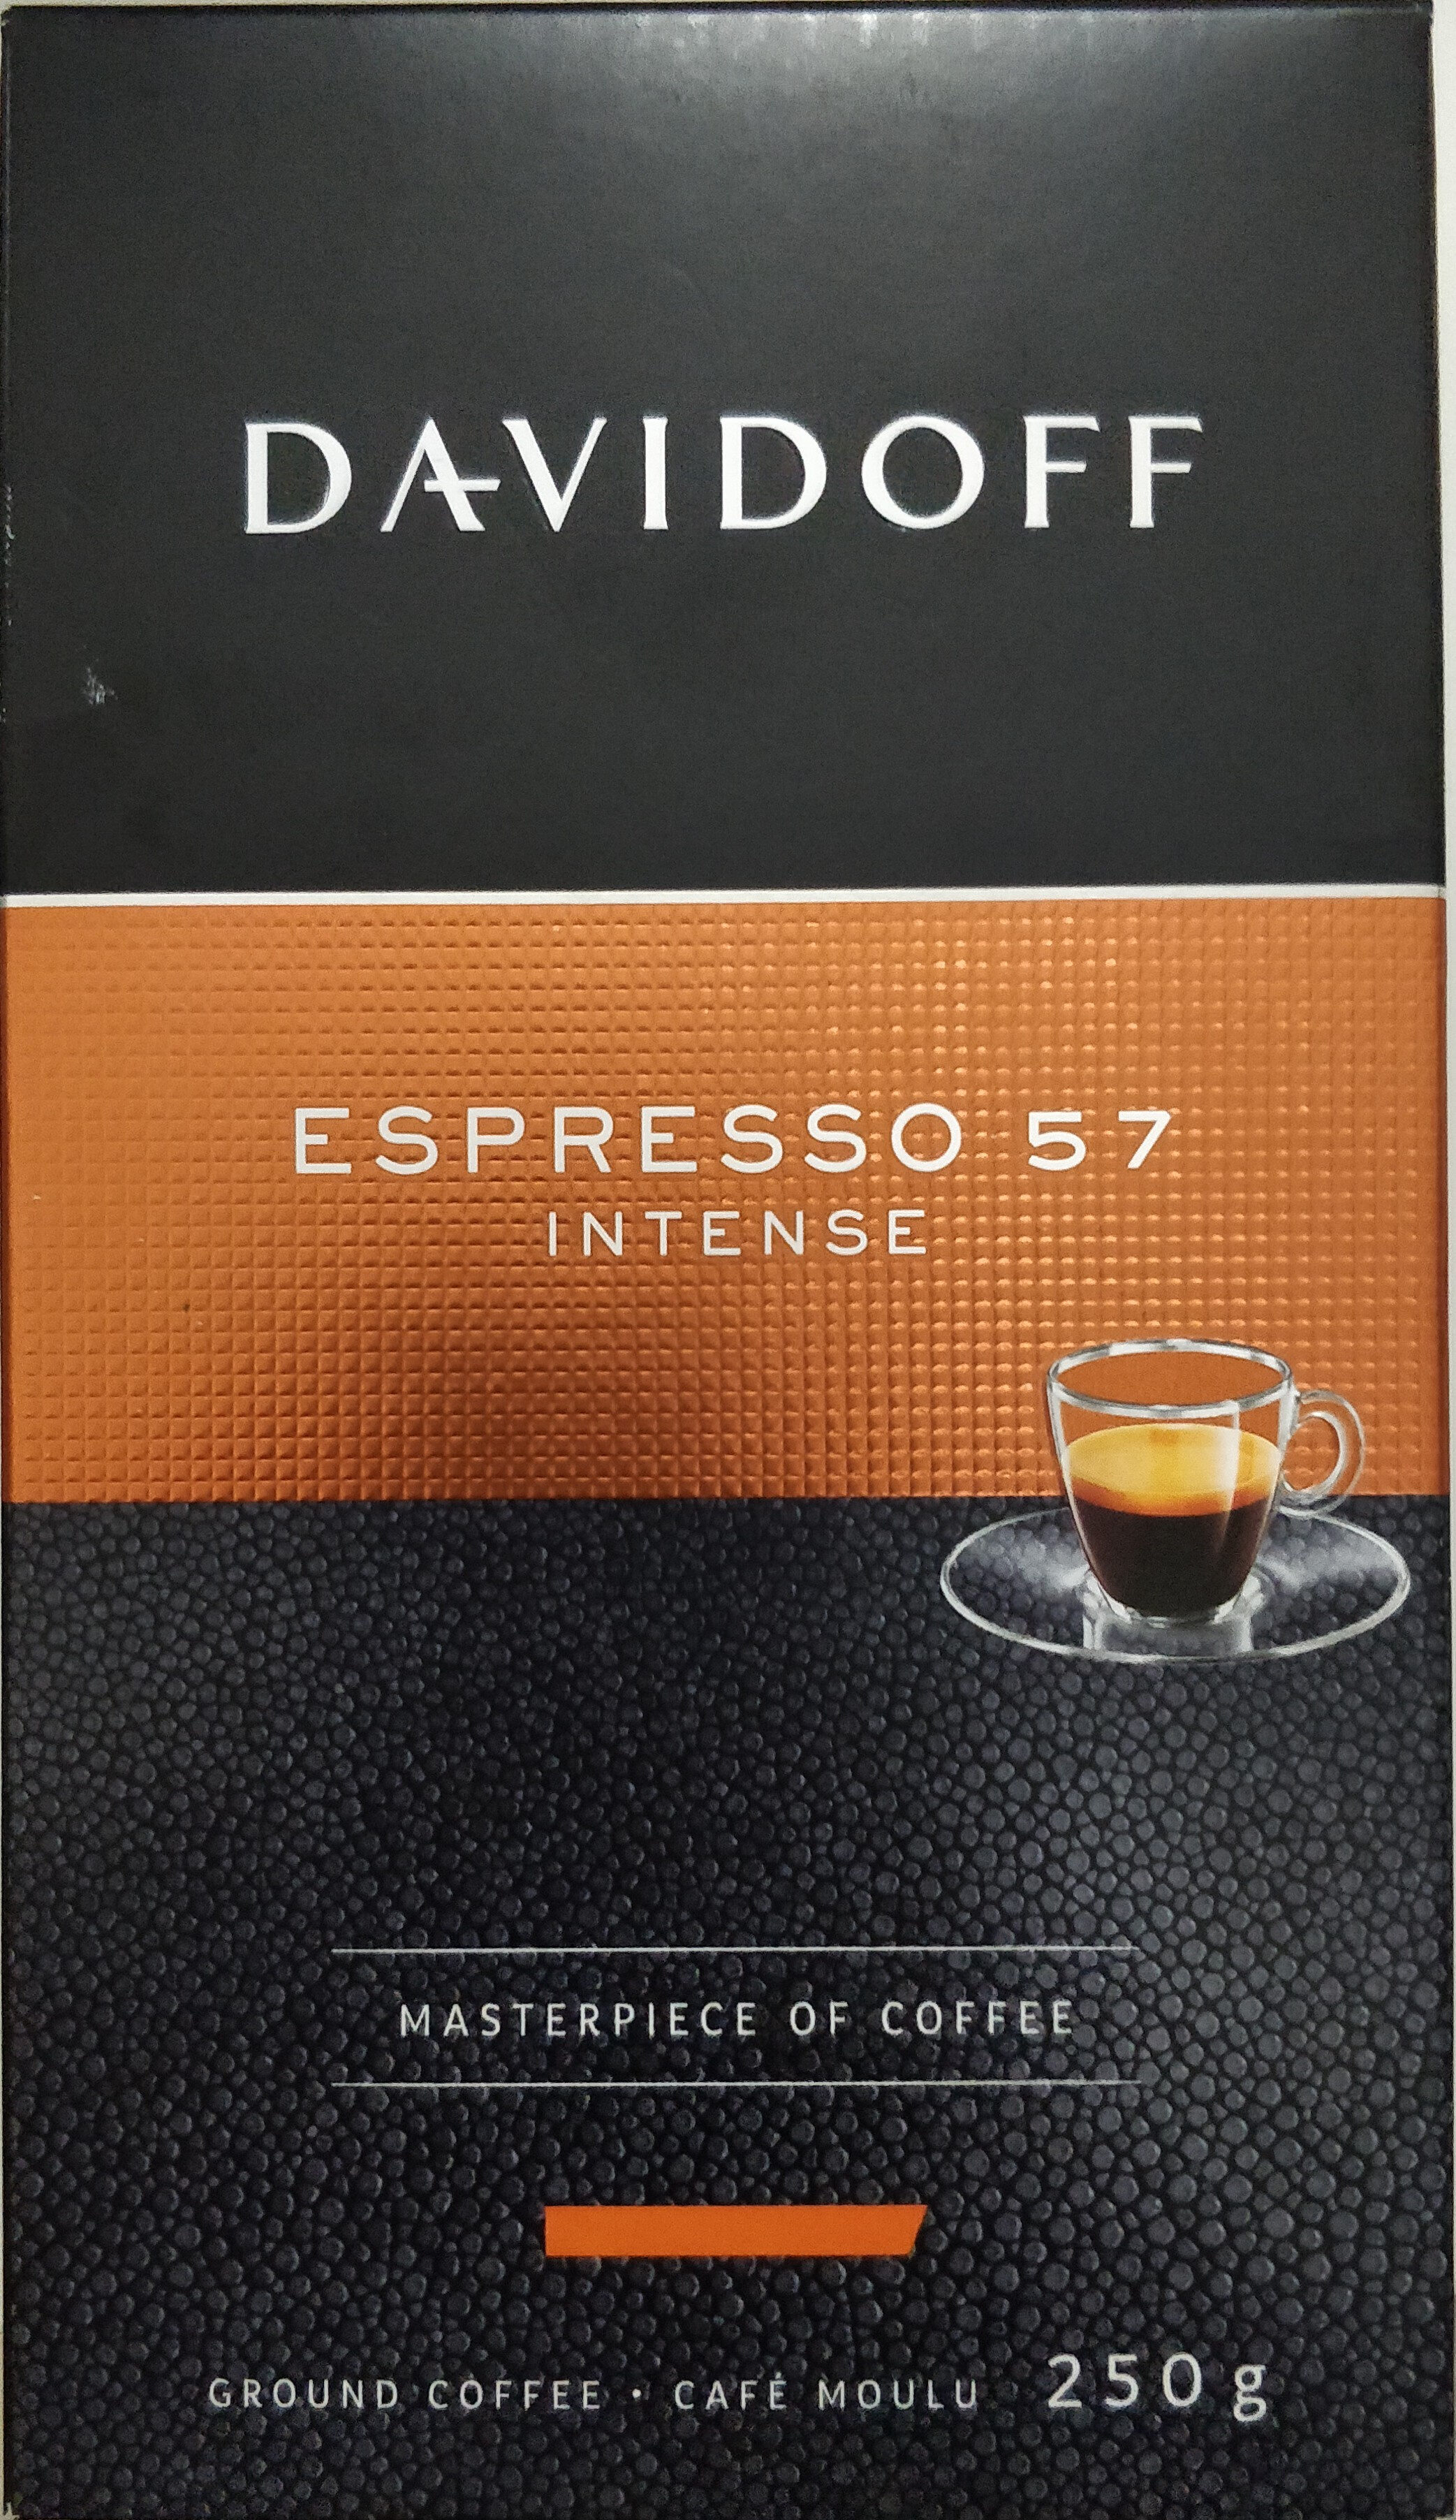 Espresso 57 Intense - Produkt - en